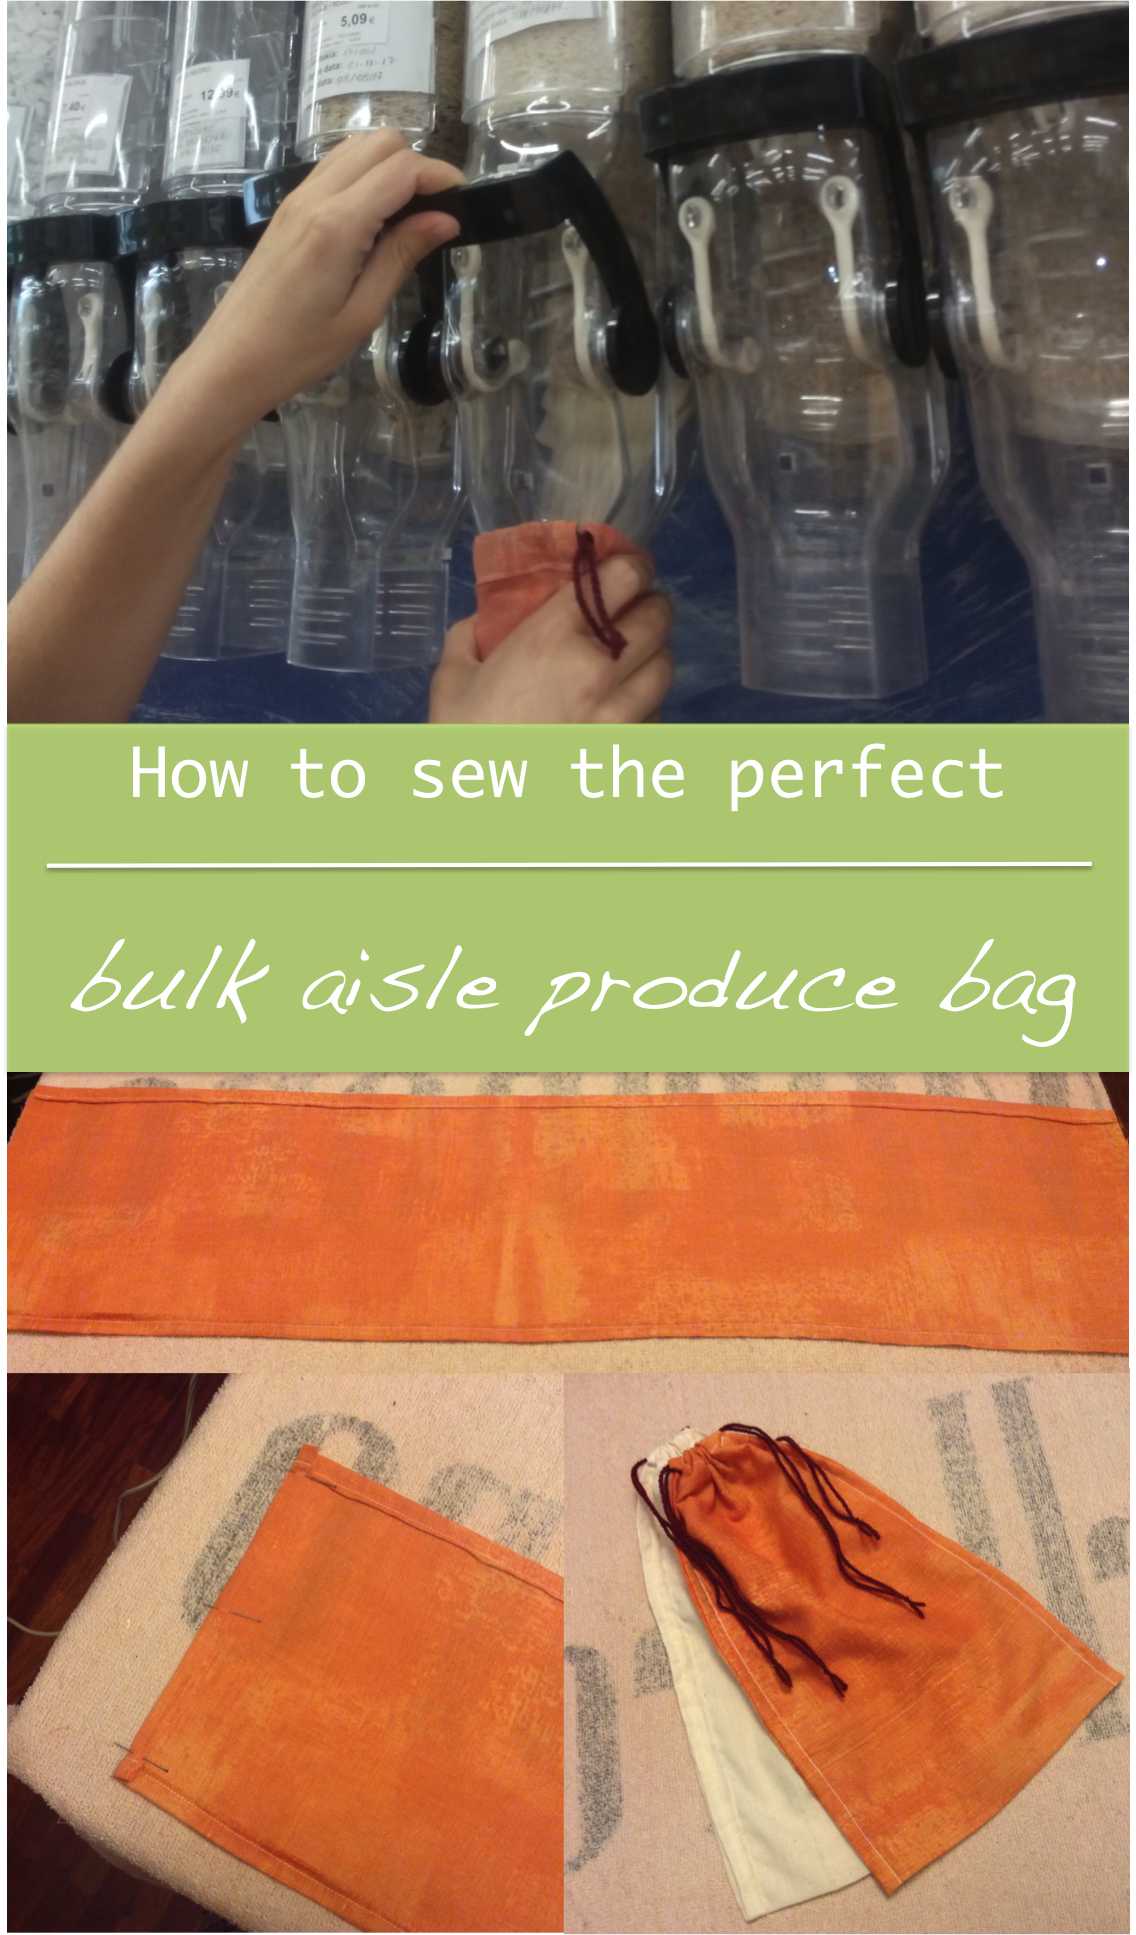 How to sew the perfect bulk aisle produce bag